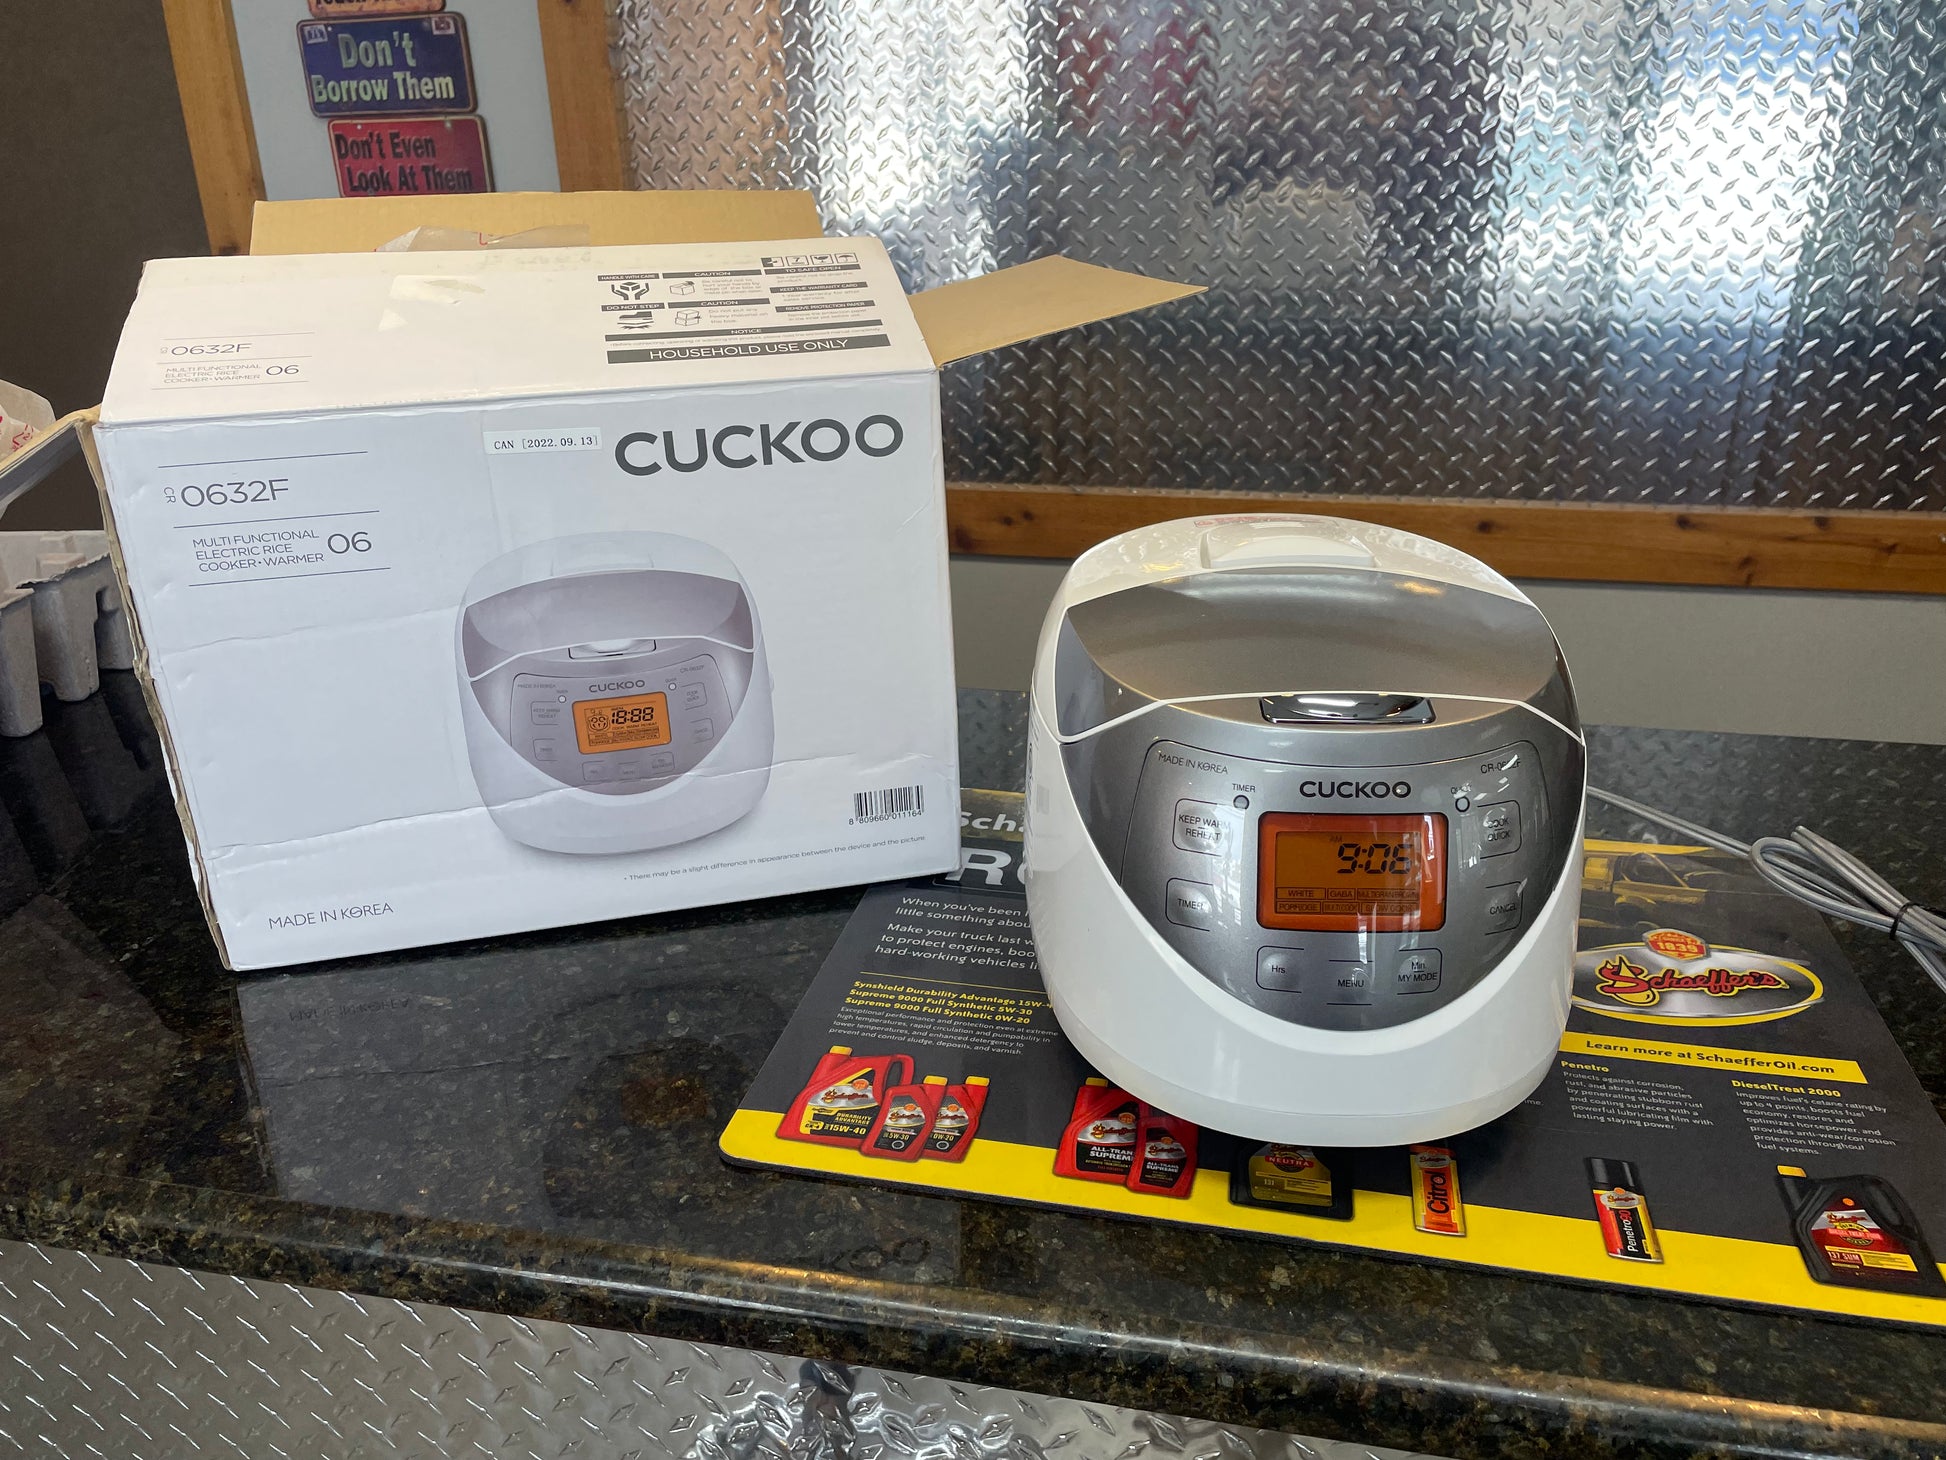 Cuckoo Micom Rice Cooker CR-0632F